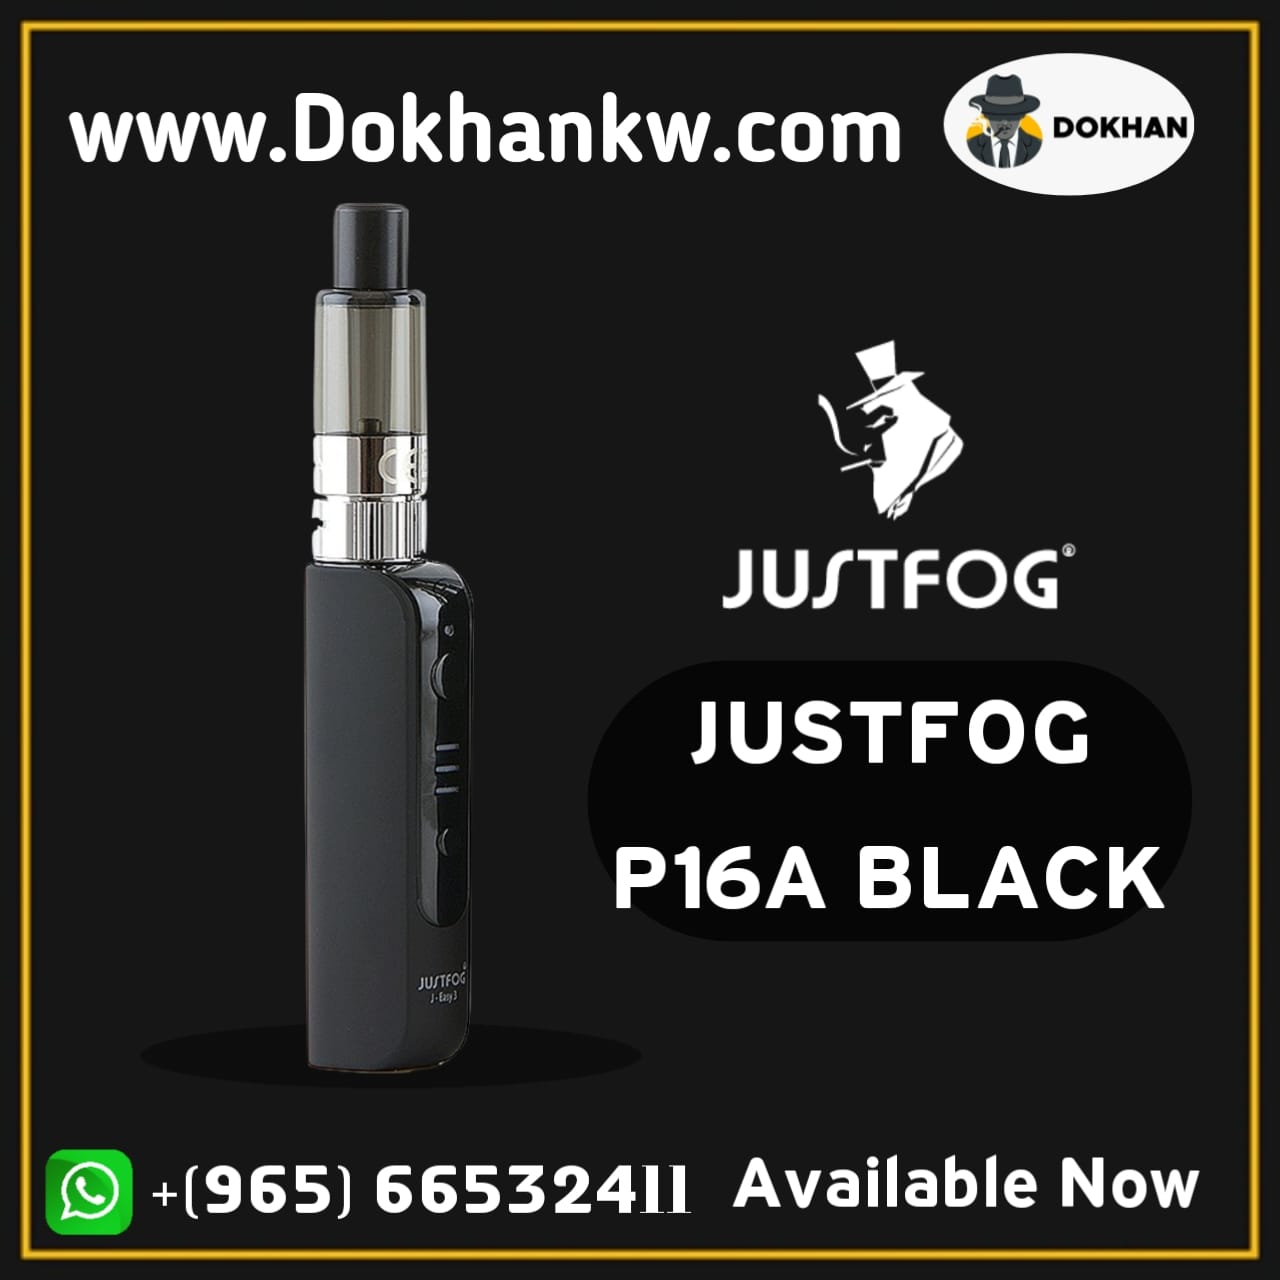 JUSTFOG P16A BLACK